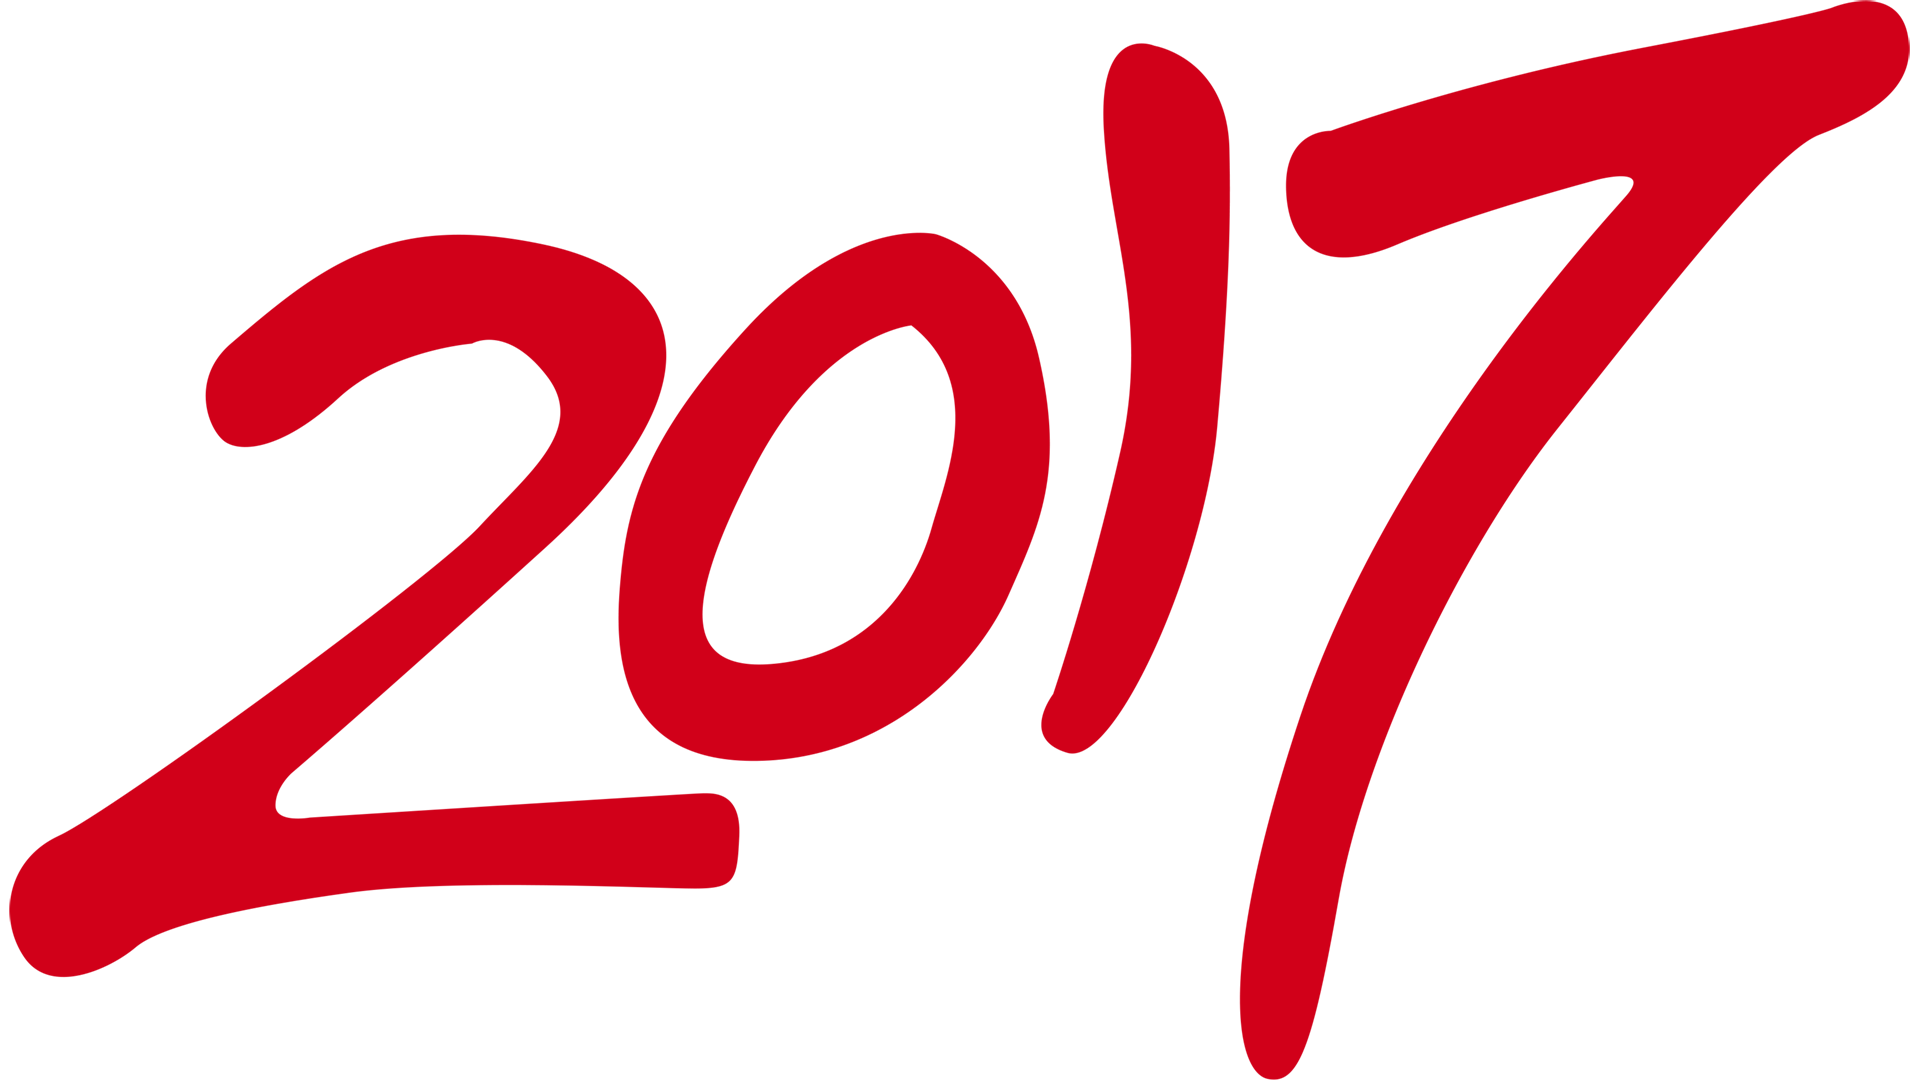 2017 Logo - 2017 Logo Png Images